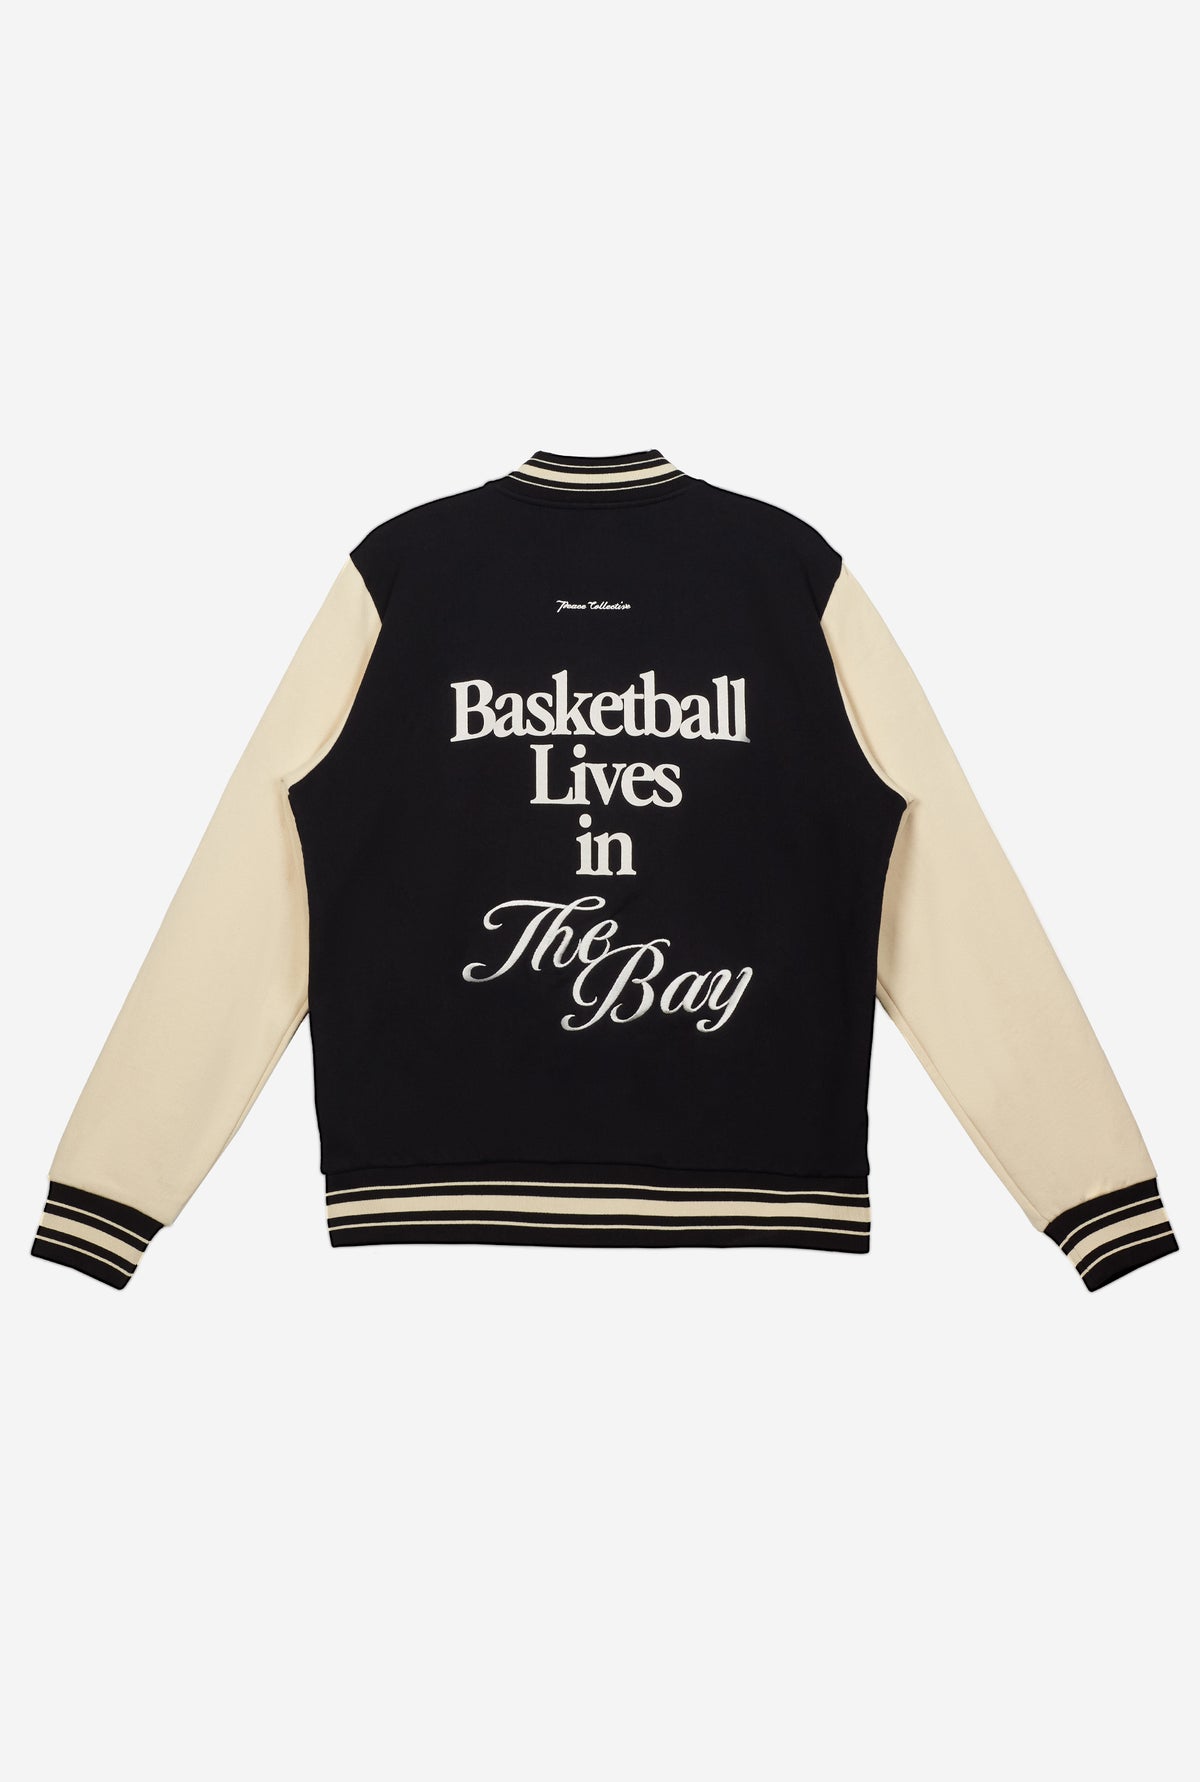 Basketball Lives in the Bay Letterman Jacket - Black/Cream